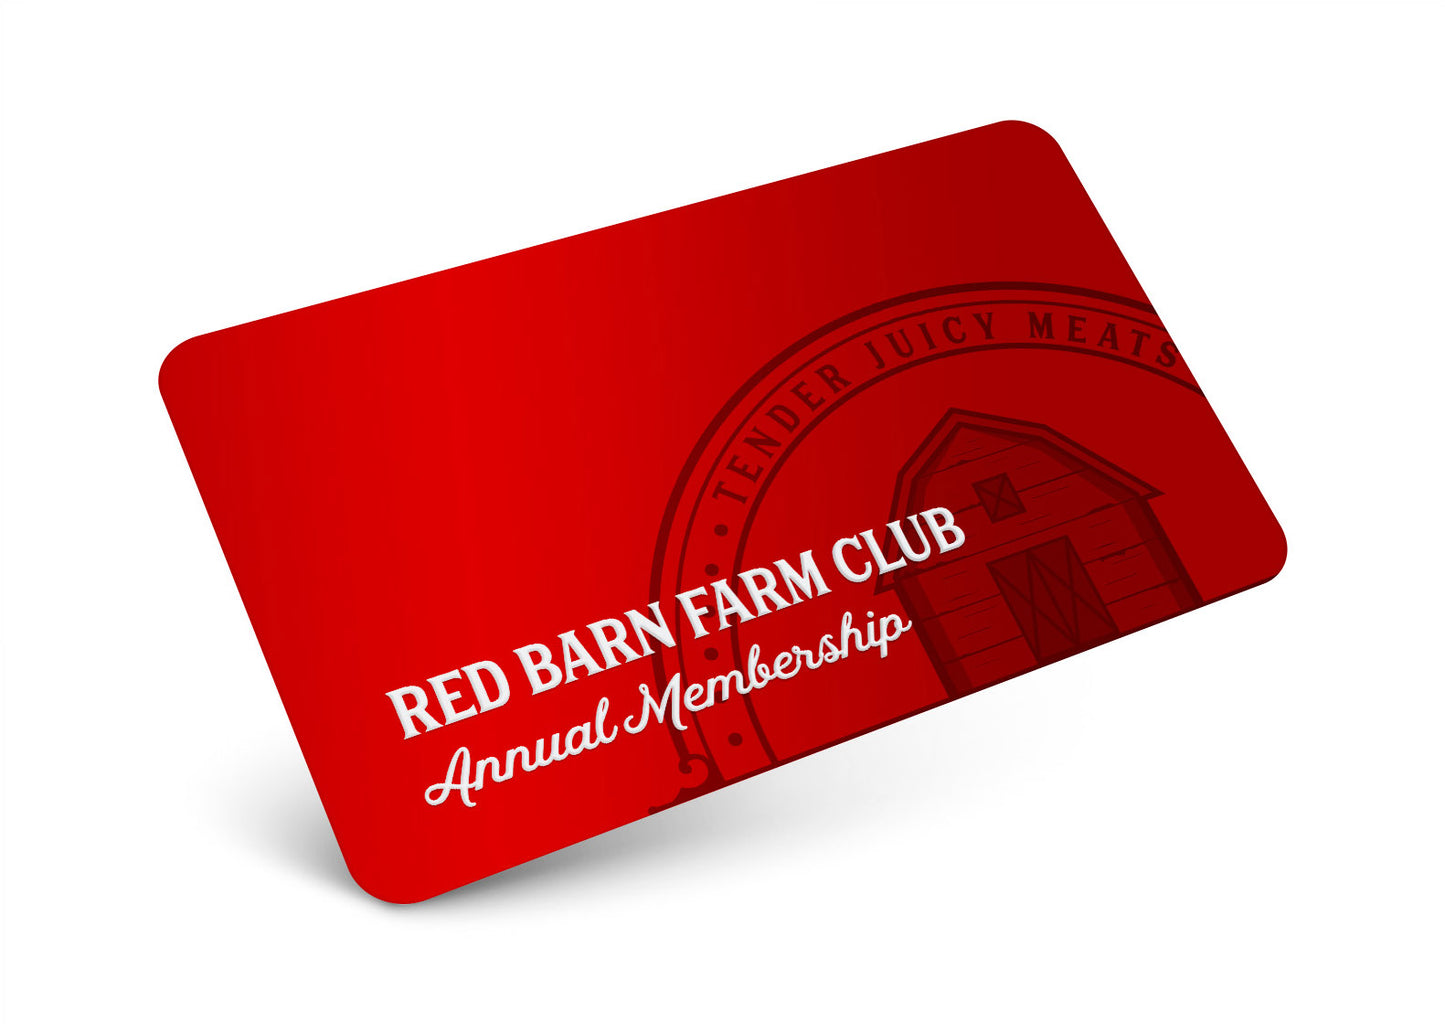 Red Barn Farm Club Annual Membership